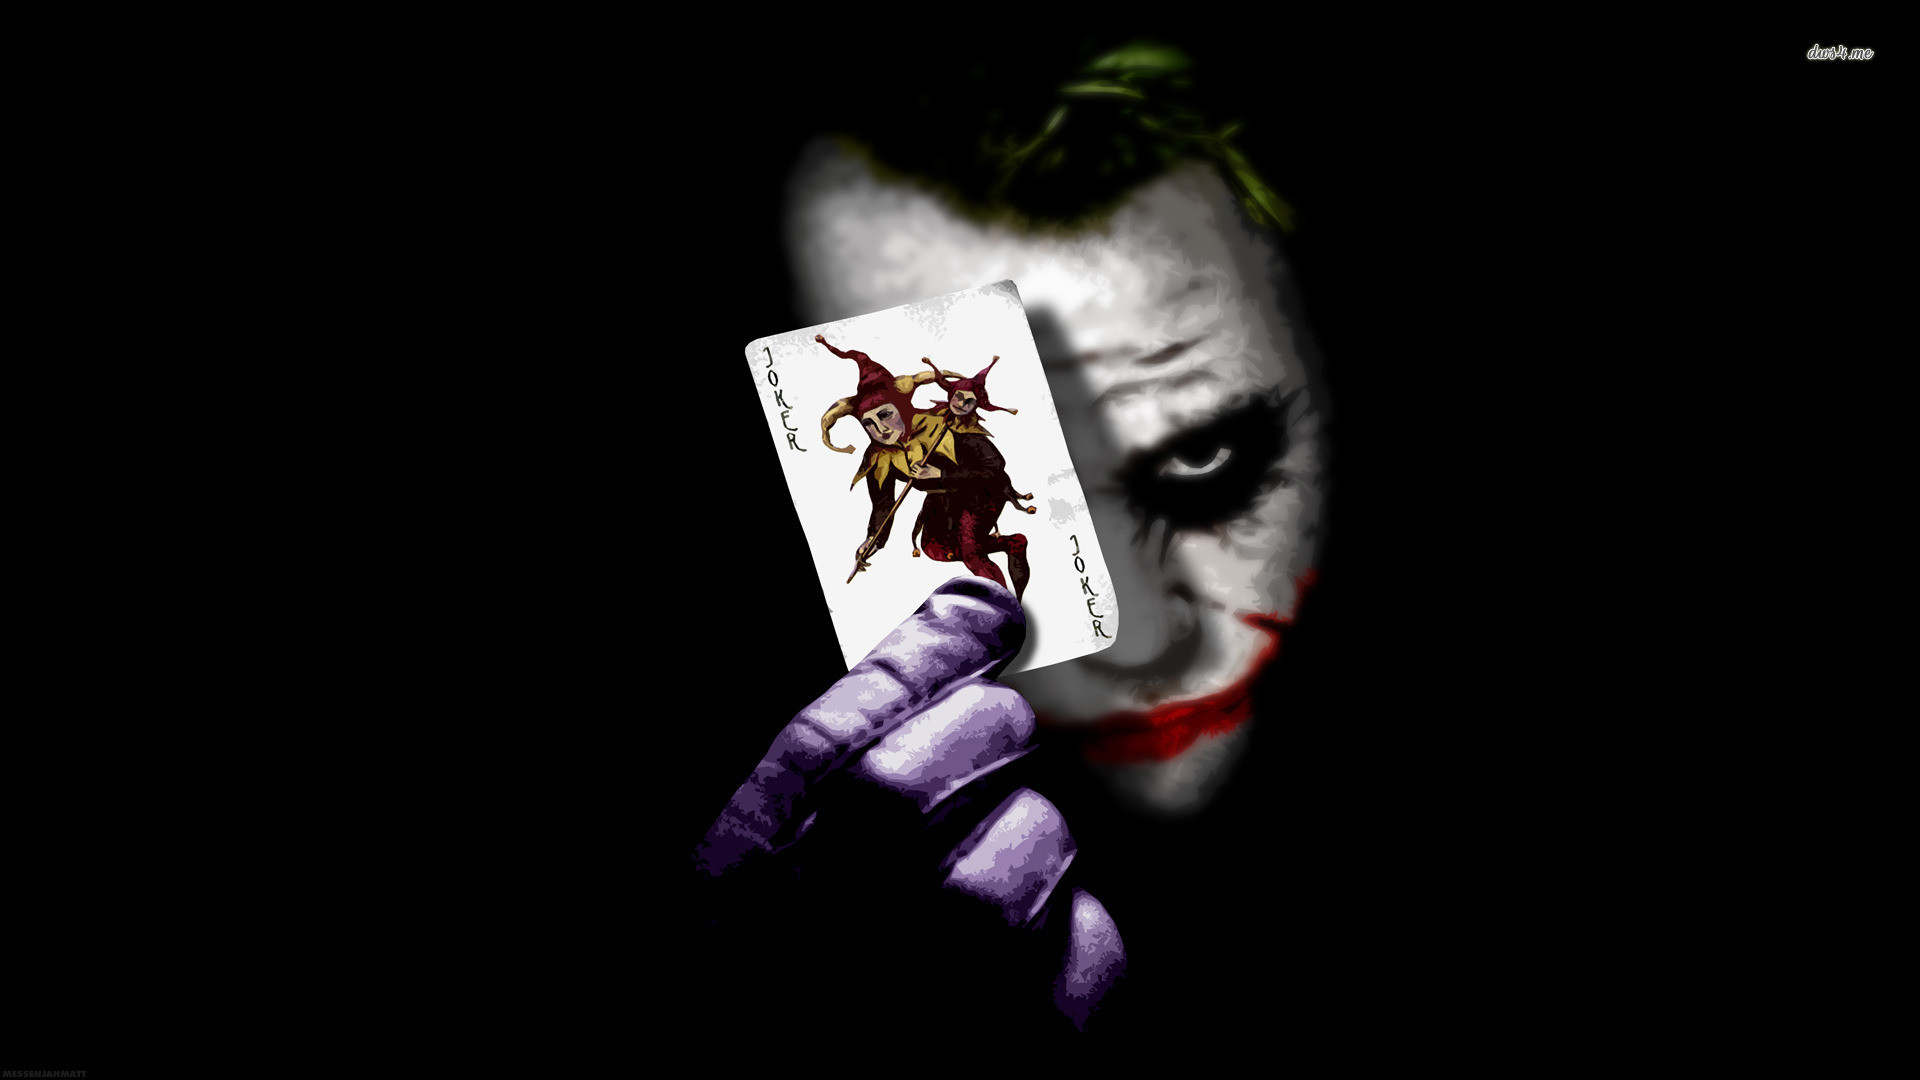 1920x1080 Download Free 85 Joker Wallpaper The Dark Knight The Quotes Land regarding  joker wallpaper regarding Encourage